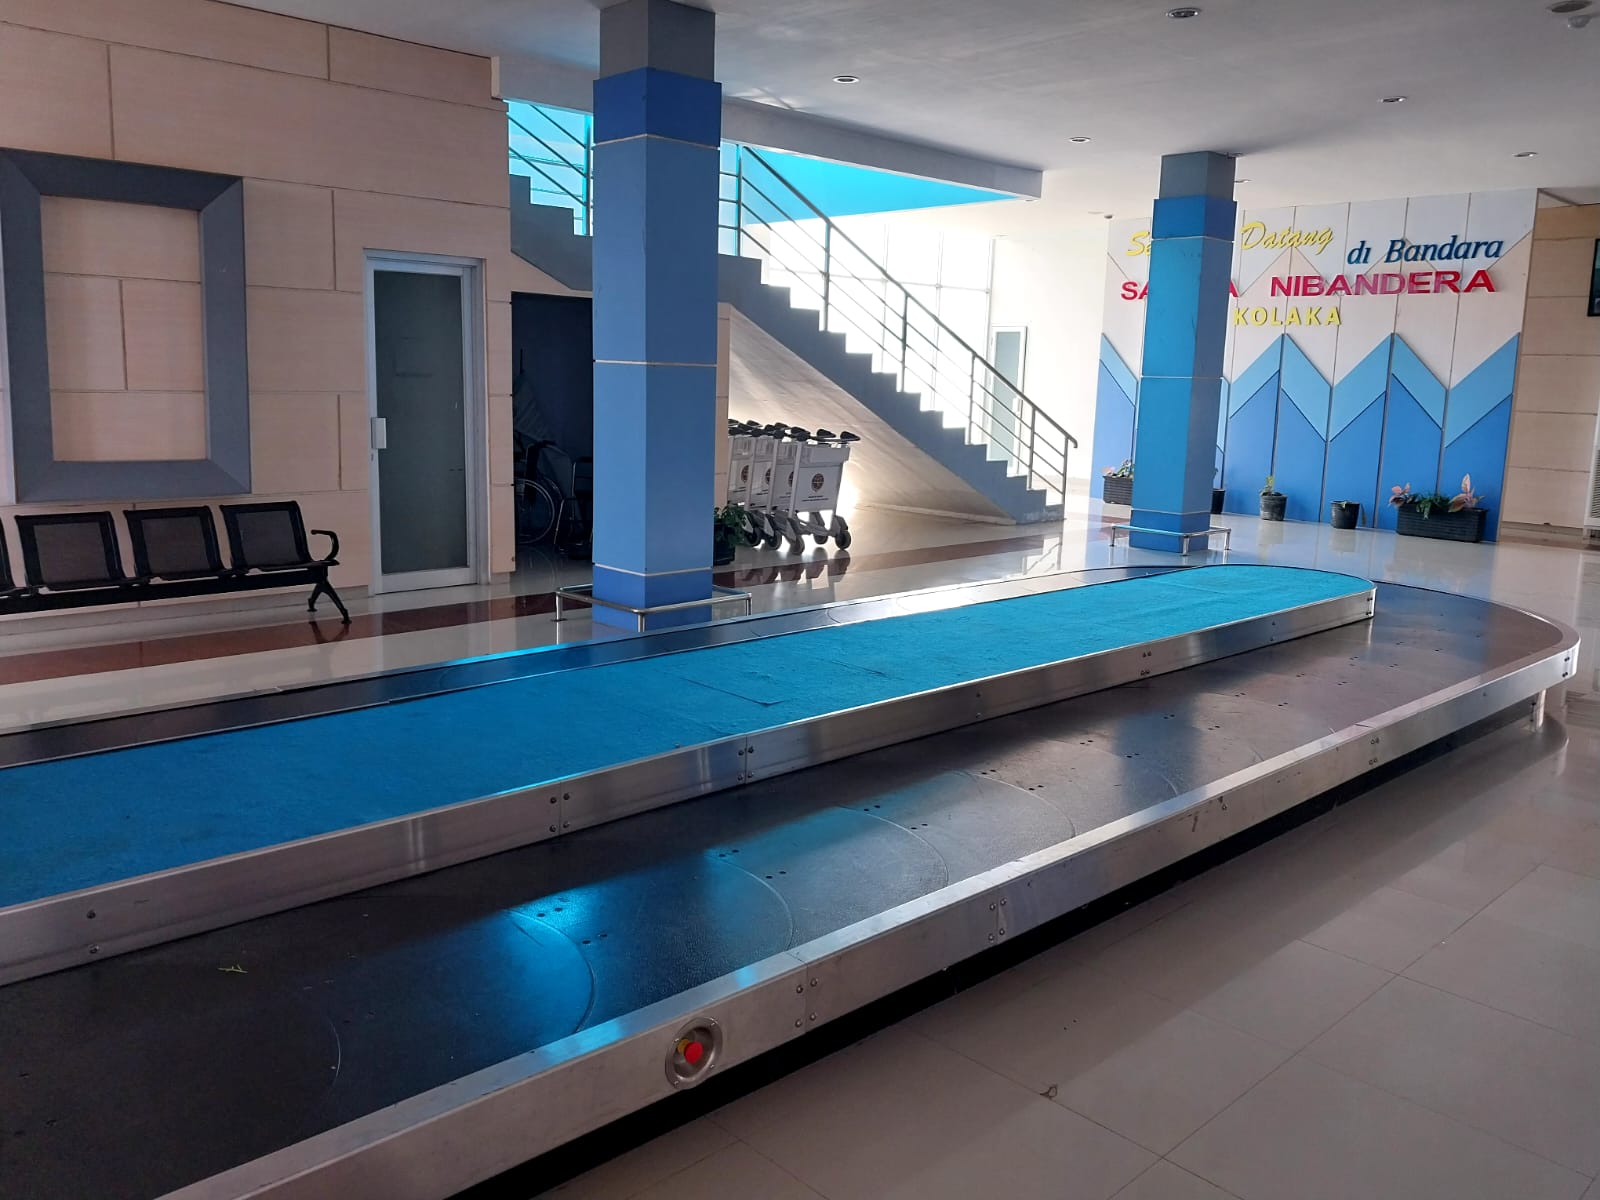 Foto Bandara Conveyor arrival